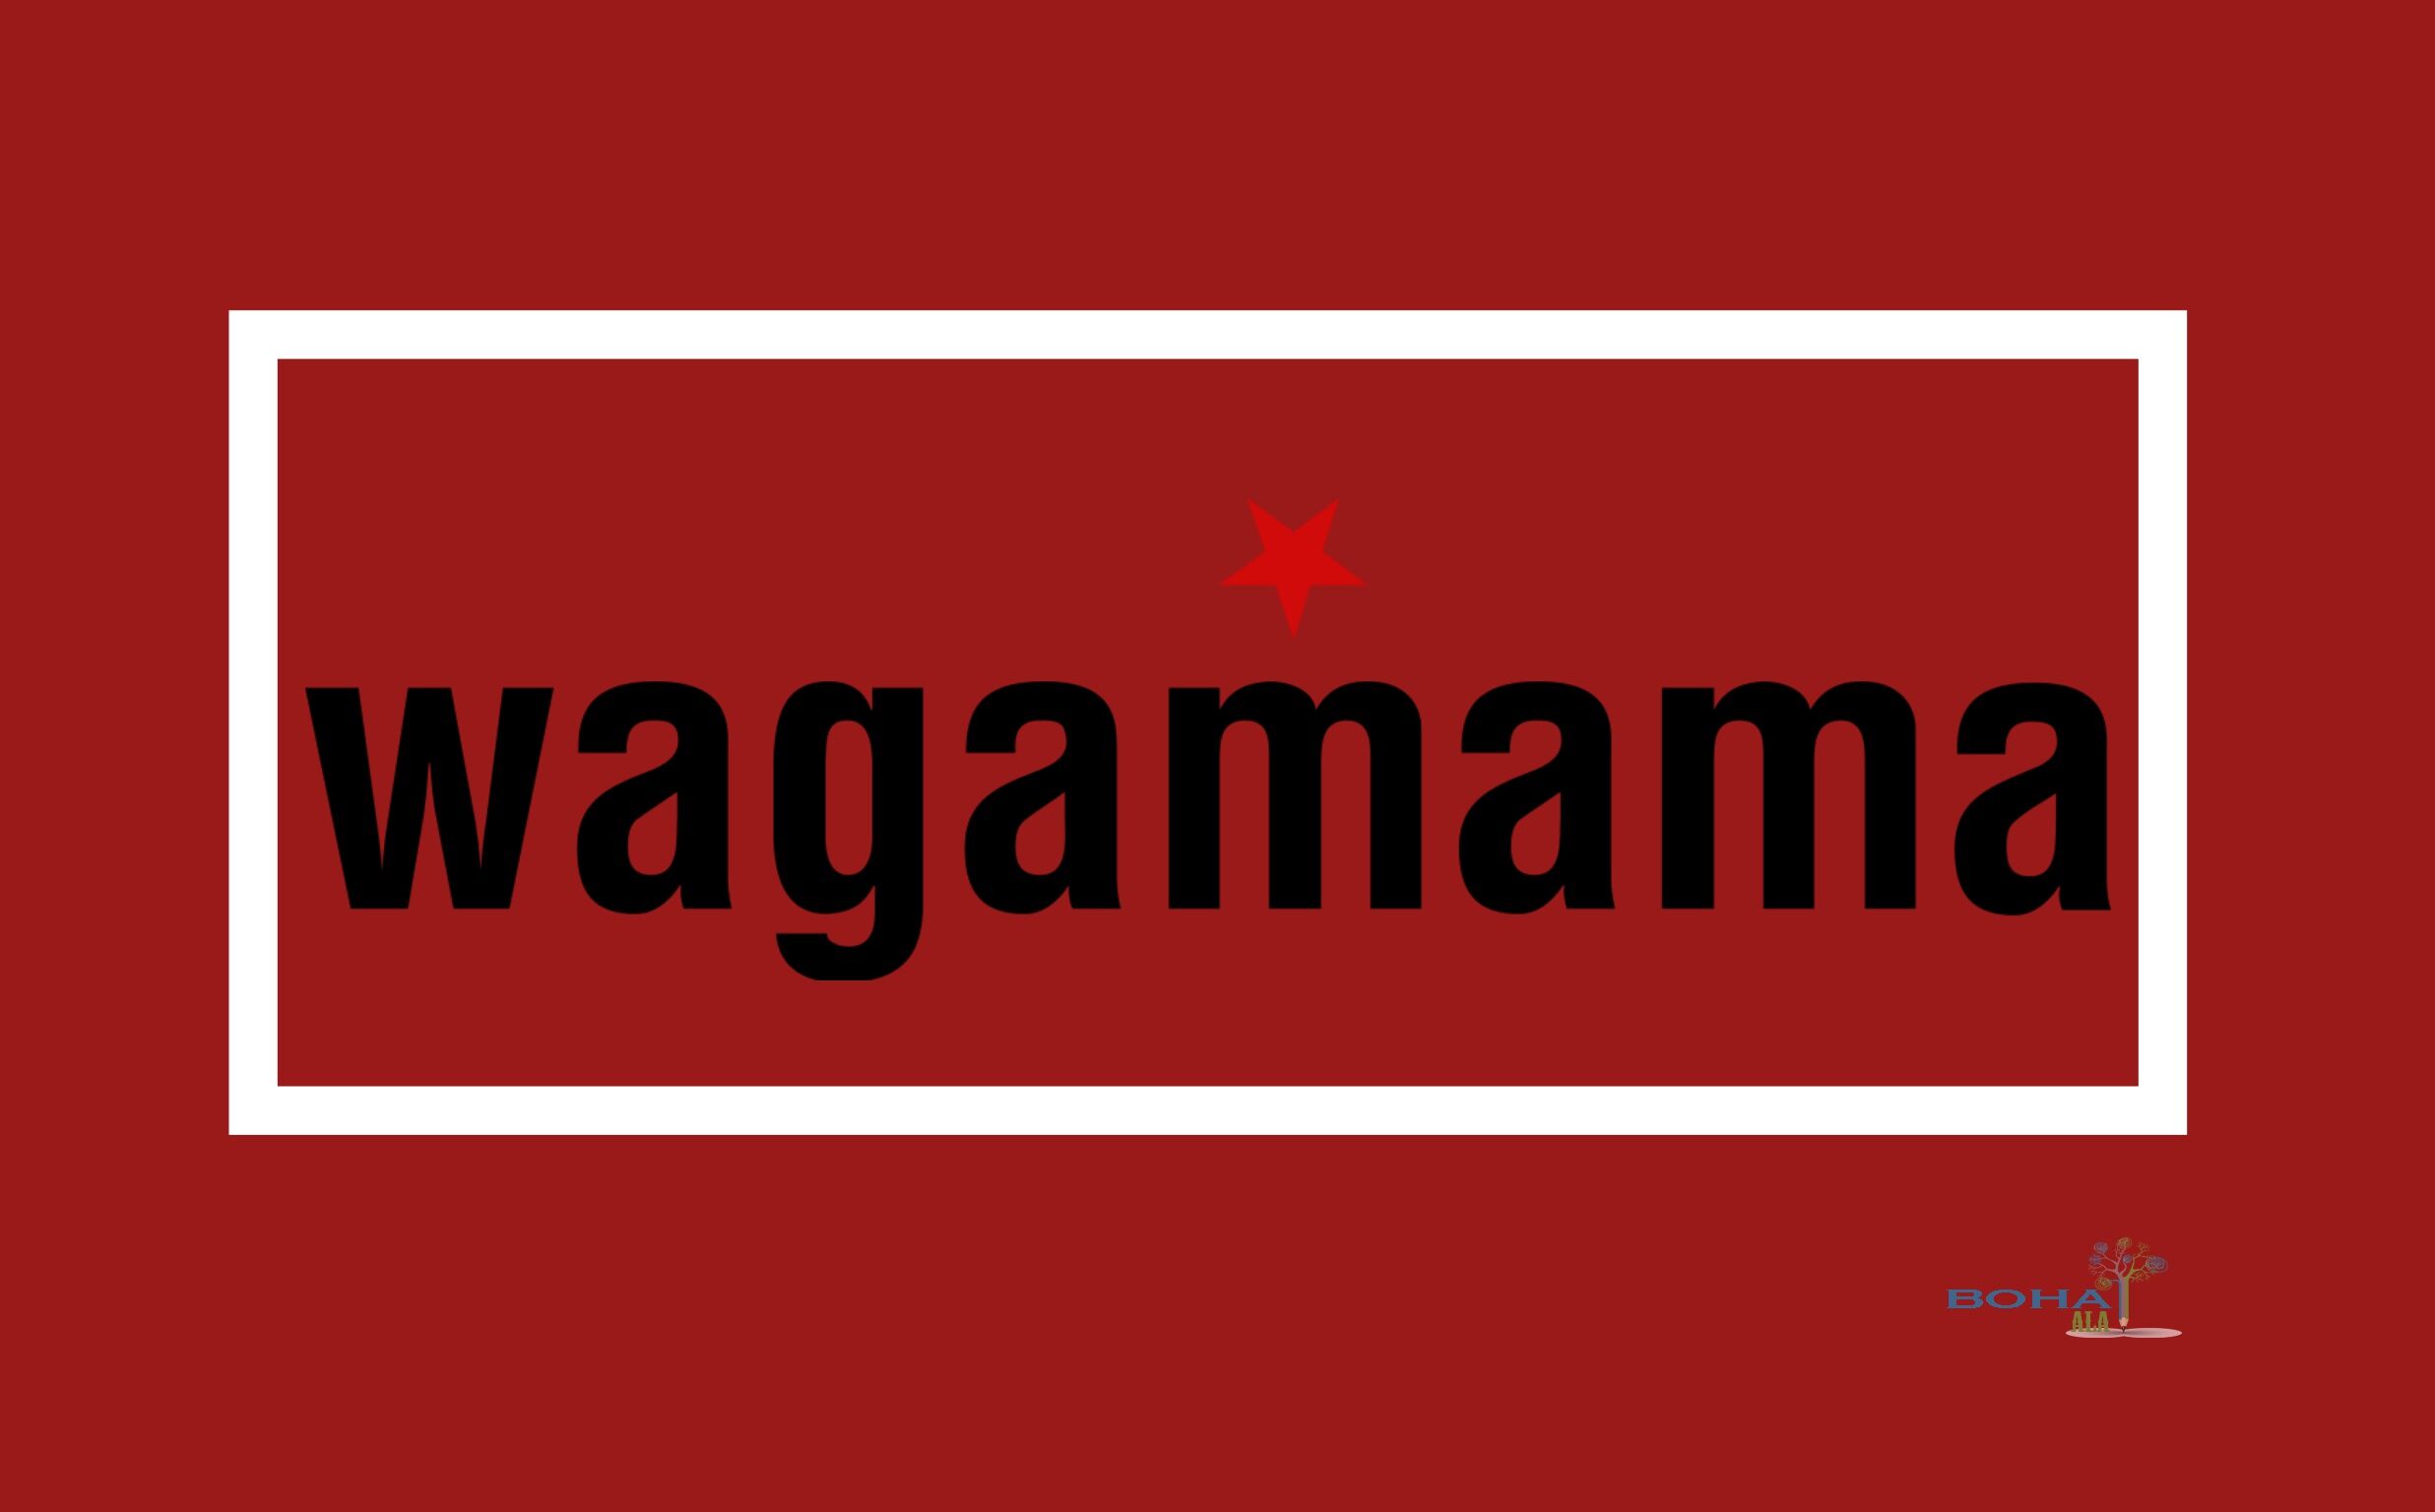 Wagamama Restaurant Marketing Strategy Report Summary